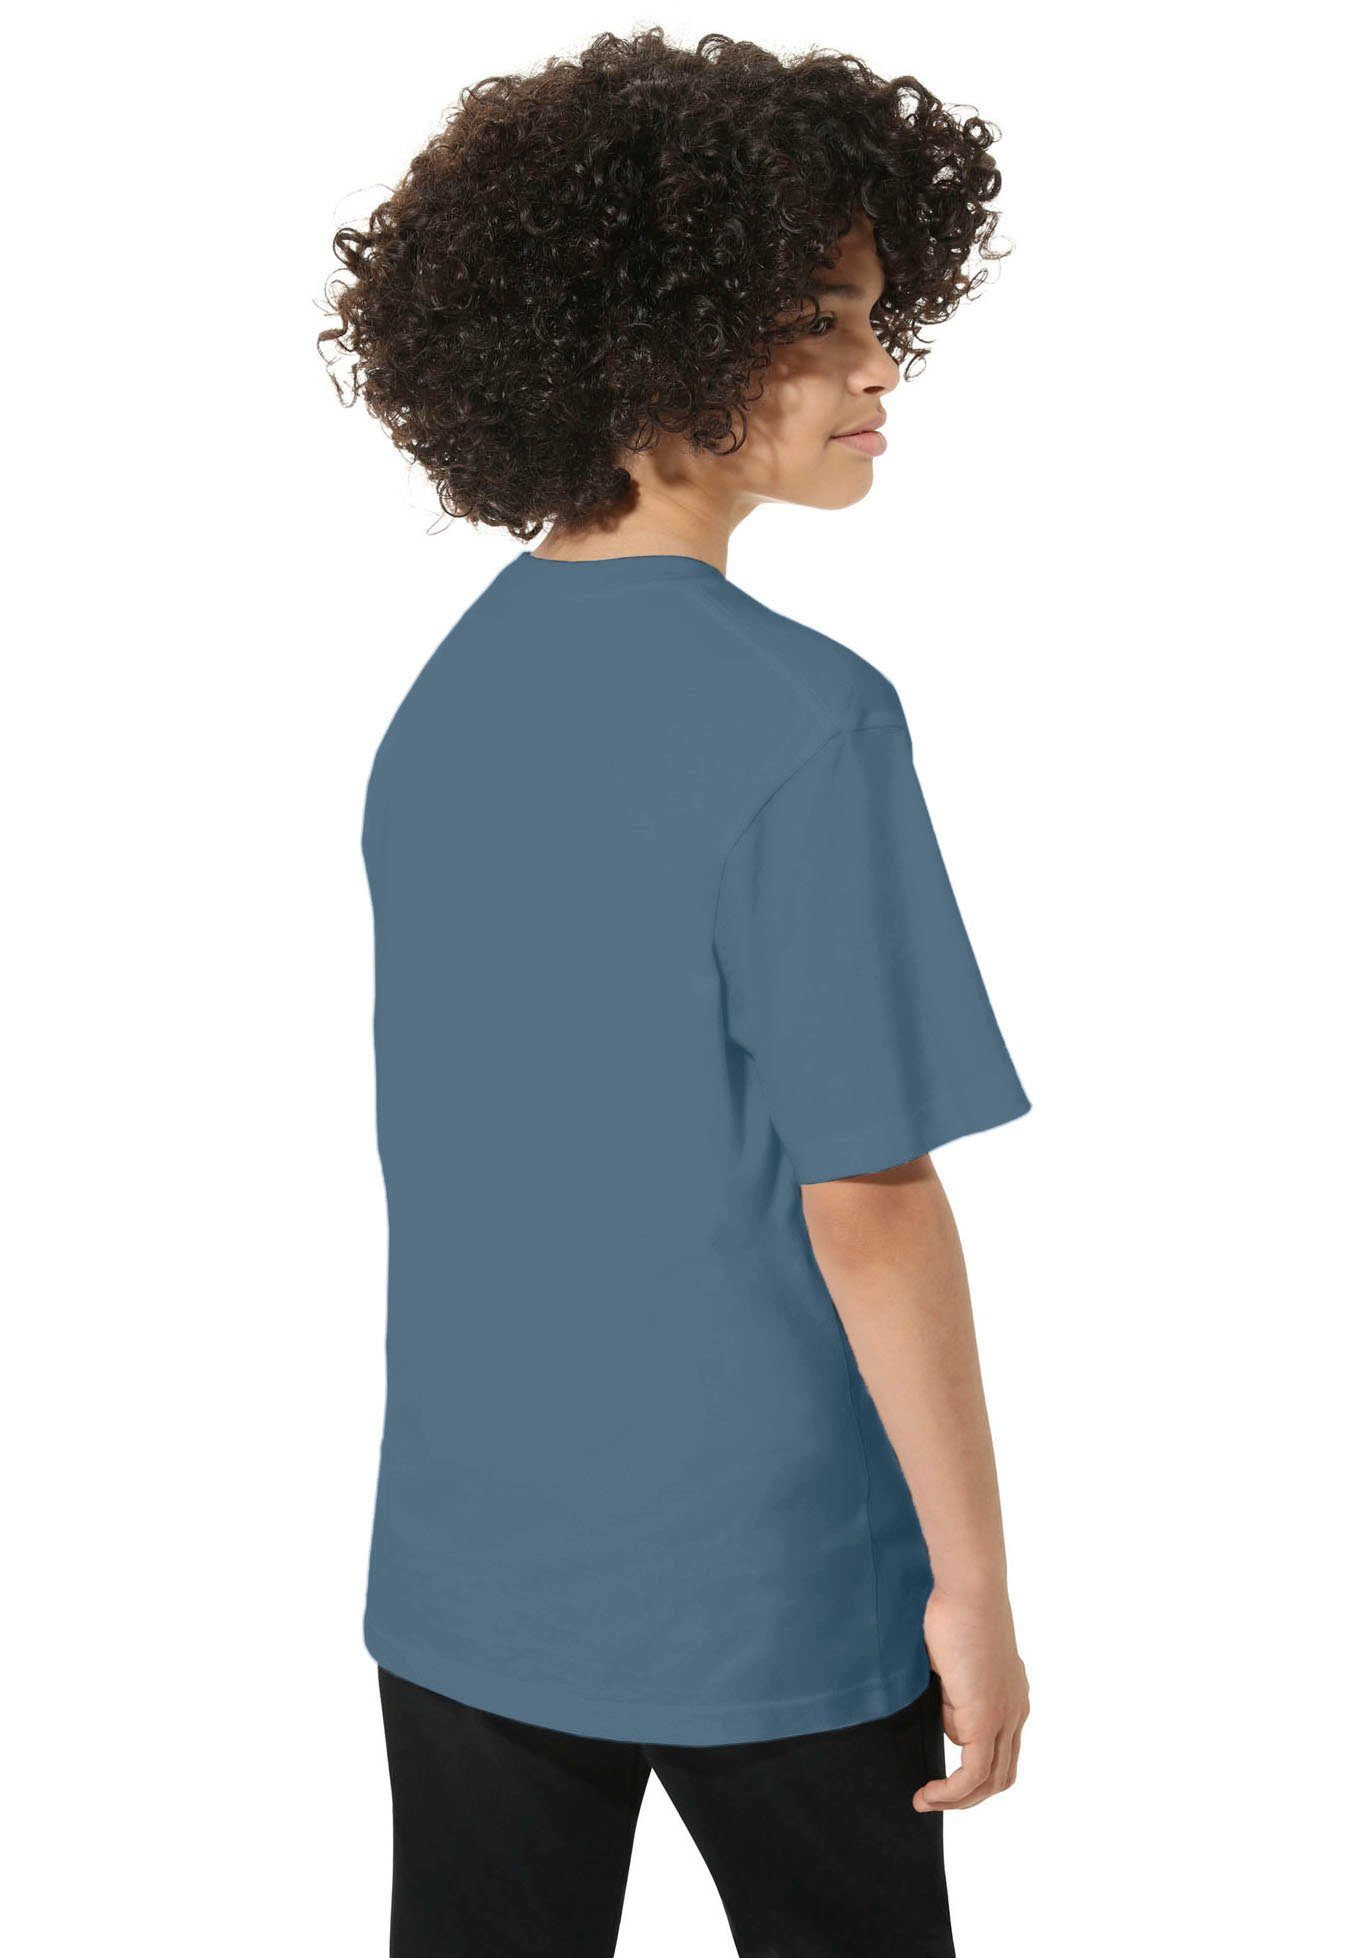 BOYS bluestone Vans VANS CLASSIC T-Shirt